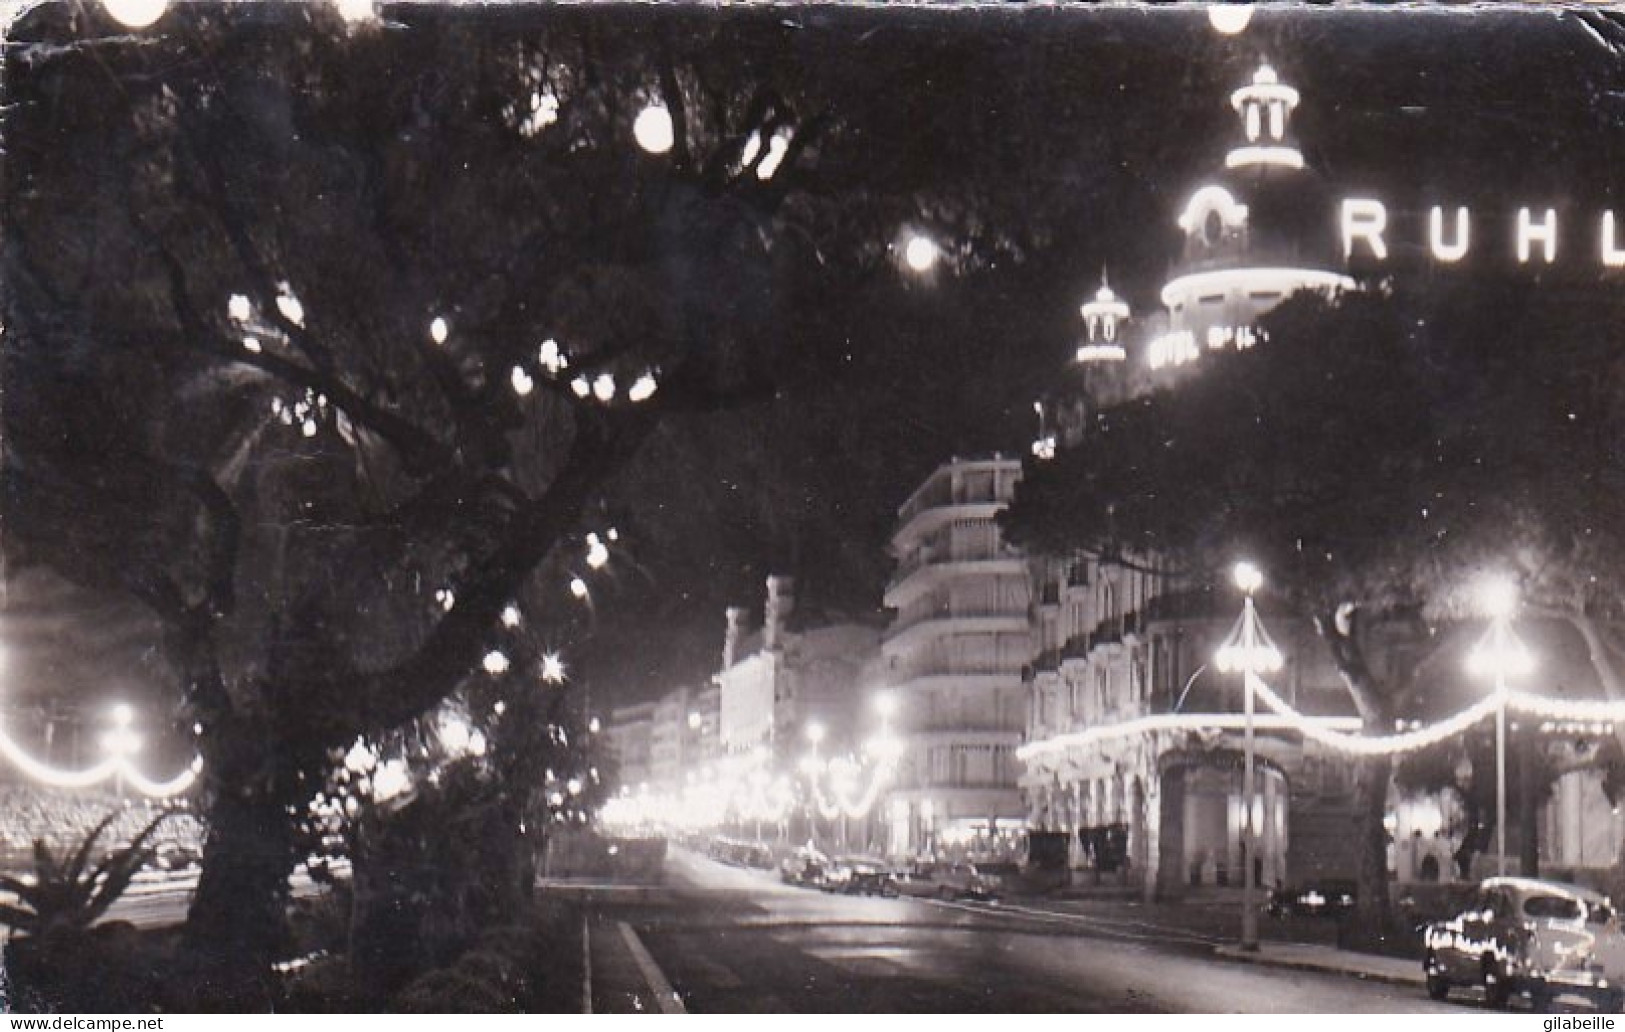 06 - NICE - La Promenade Des Anglais Et Les Illuminations - Nizza By Night